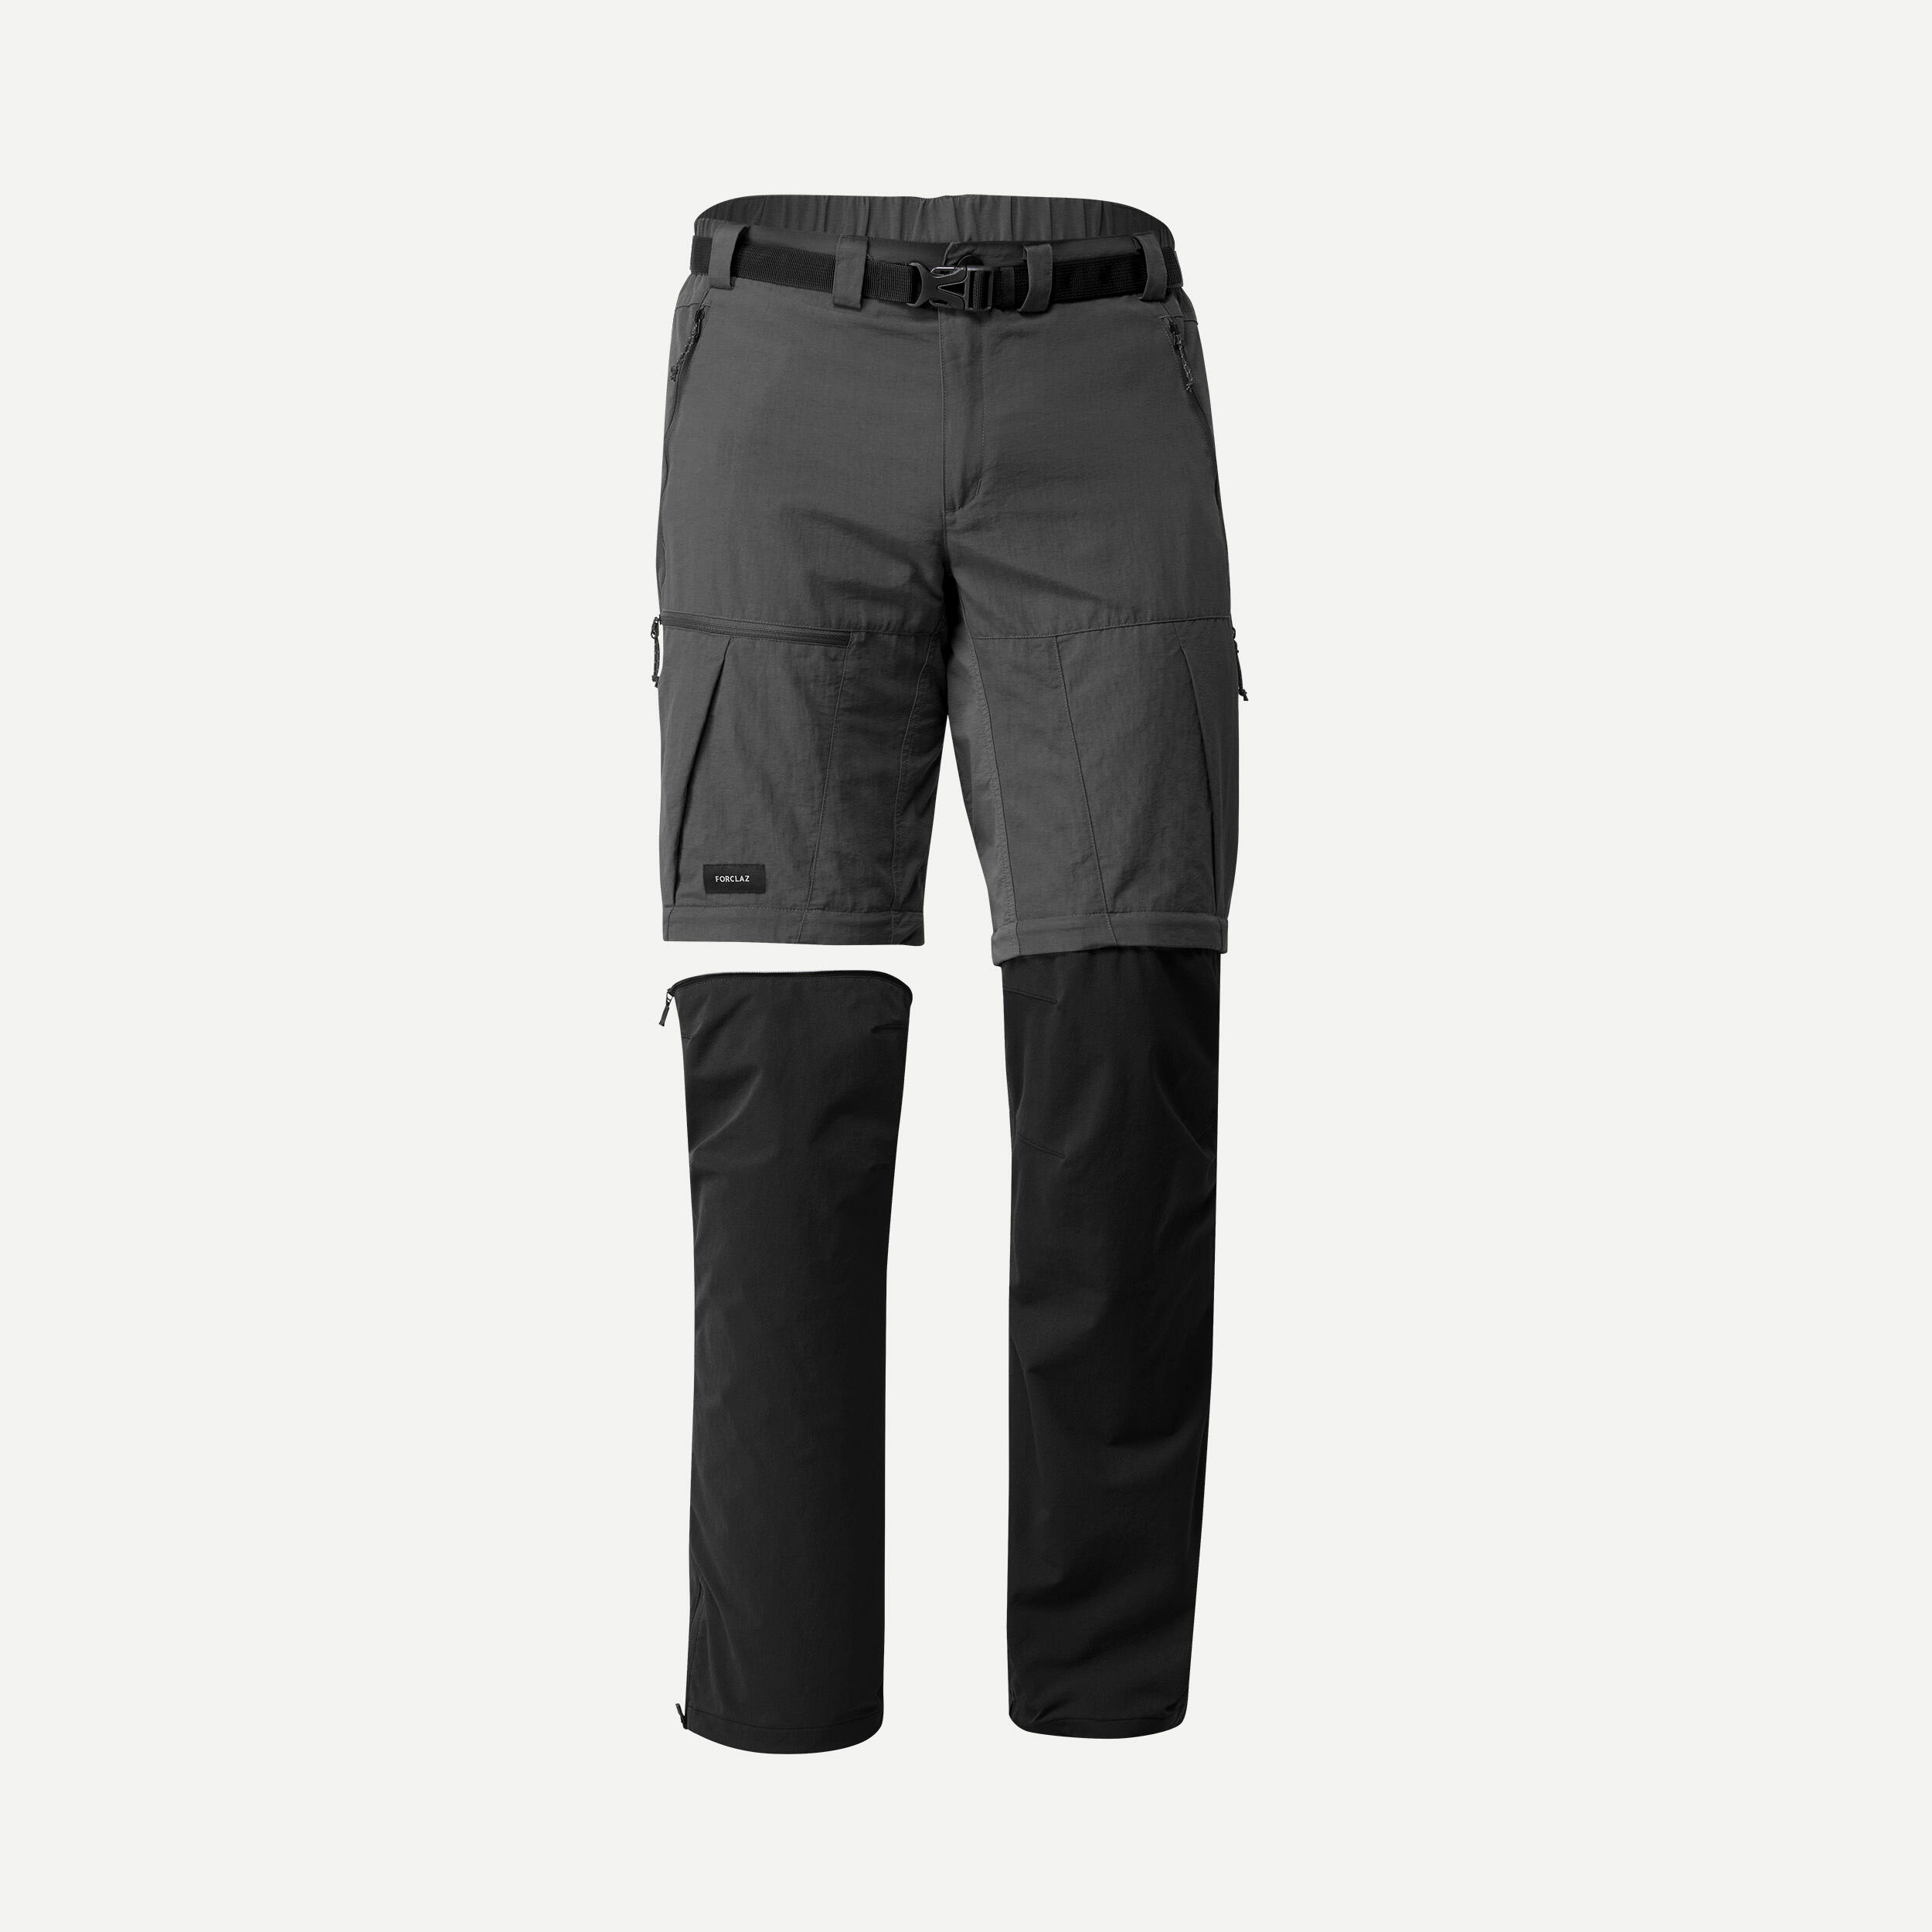 Mens Mountain Trekking Modular Trousers  TREK 500  Dark Grey